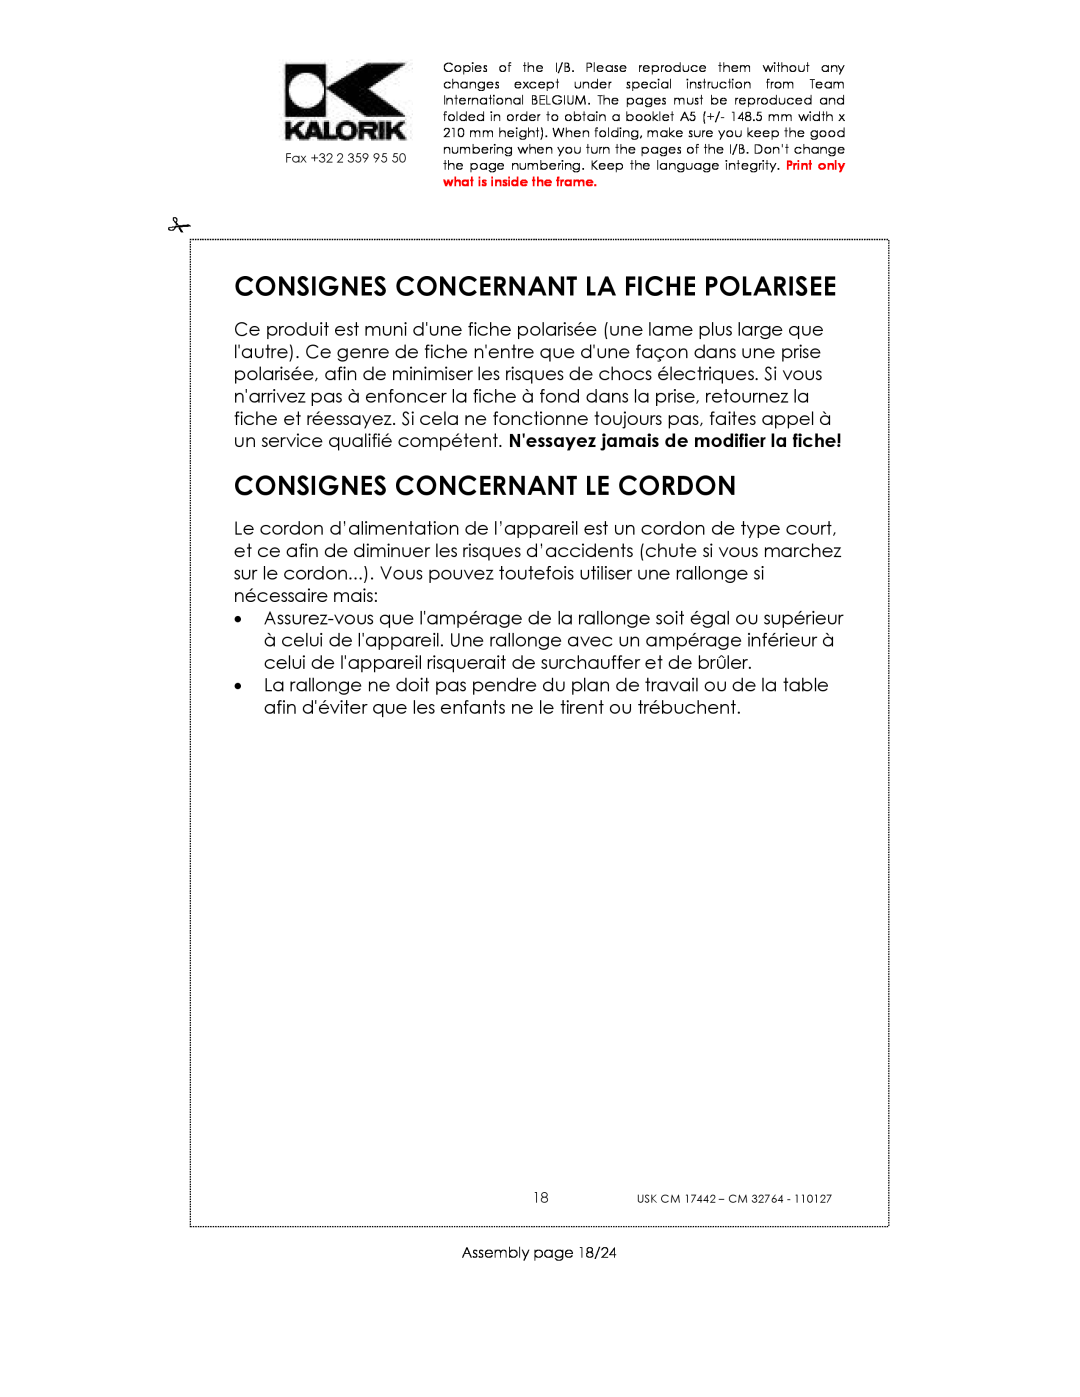 Kalorik USK CM 17442 manual Consignes Concernant La Fiche Polarisee, Consignes Concernant Le Cordon, Assembly page 18/24 